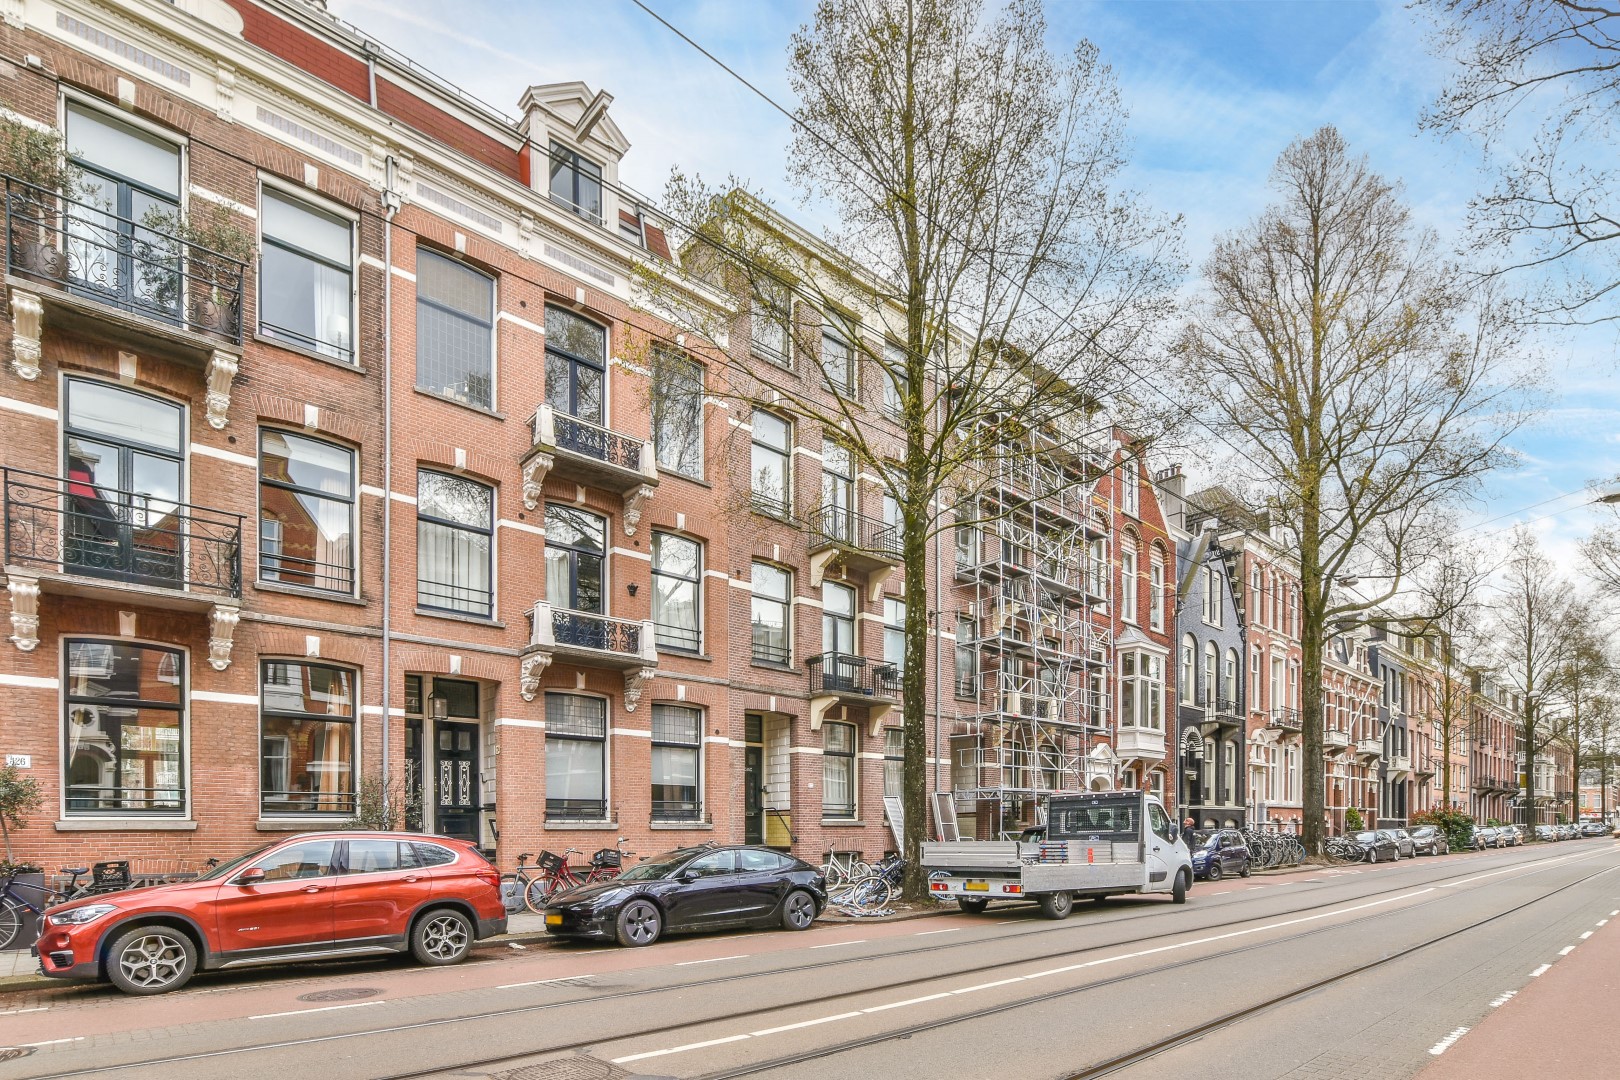 Willemsparkweg 122 bv 1071 HP, Amsterdam, Noord-Holland Nederland, 5 Bedrooms Bedrooms, ,1 BathroomBathrooms,Apartment,For Rent,Willemsparkweg,2,1211